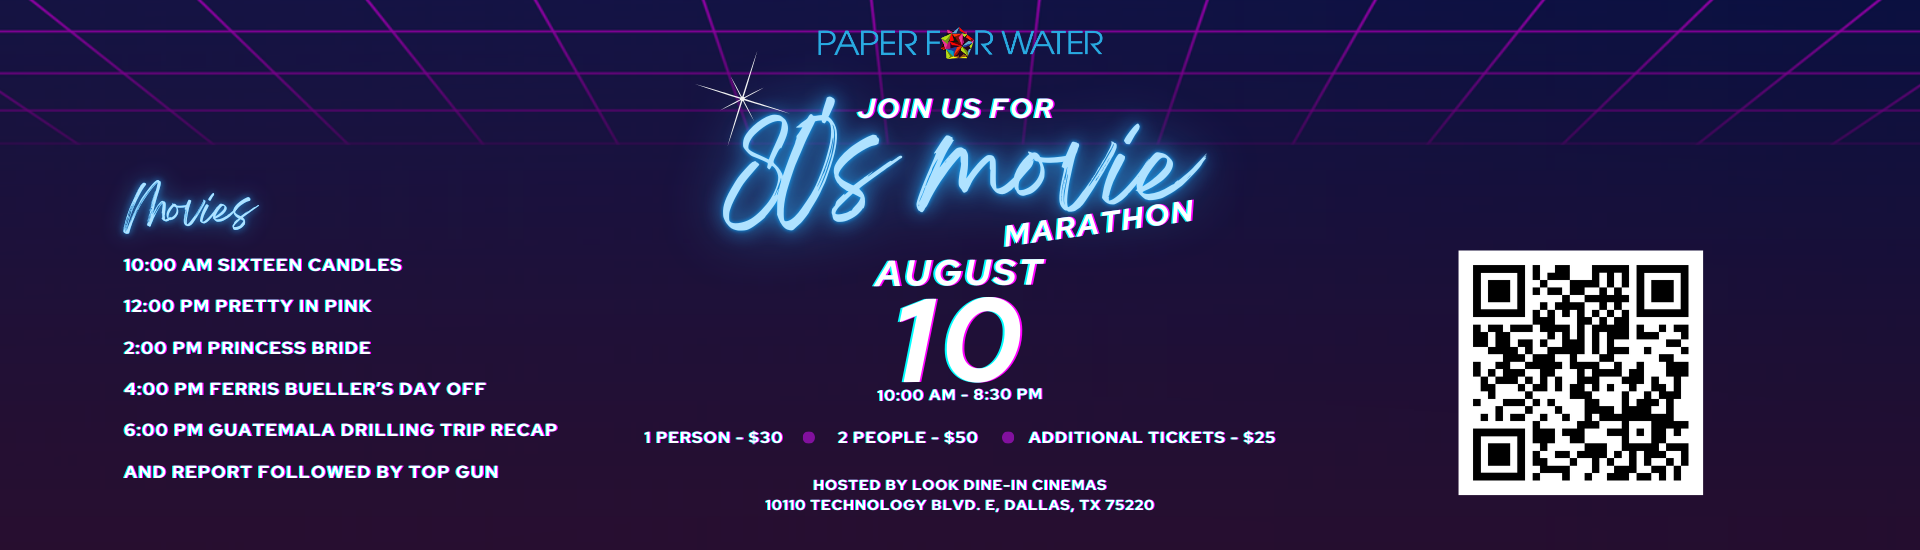 Paper for water main banner desktop 15